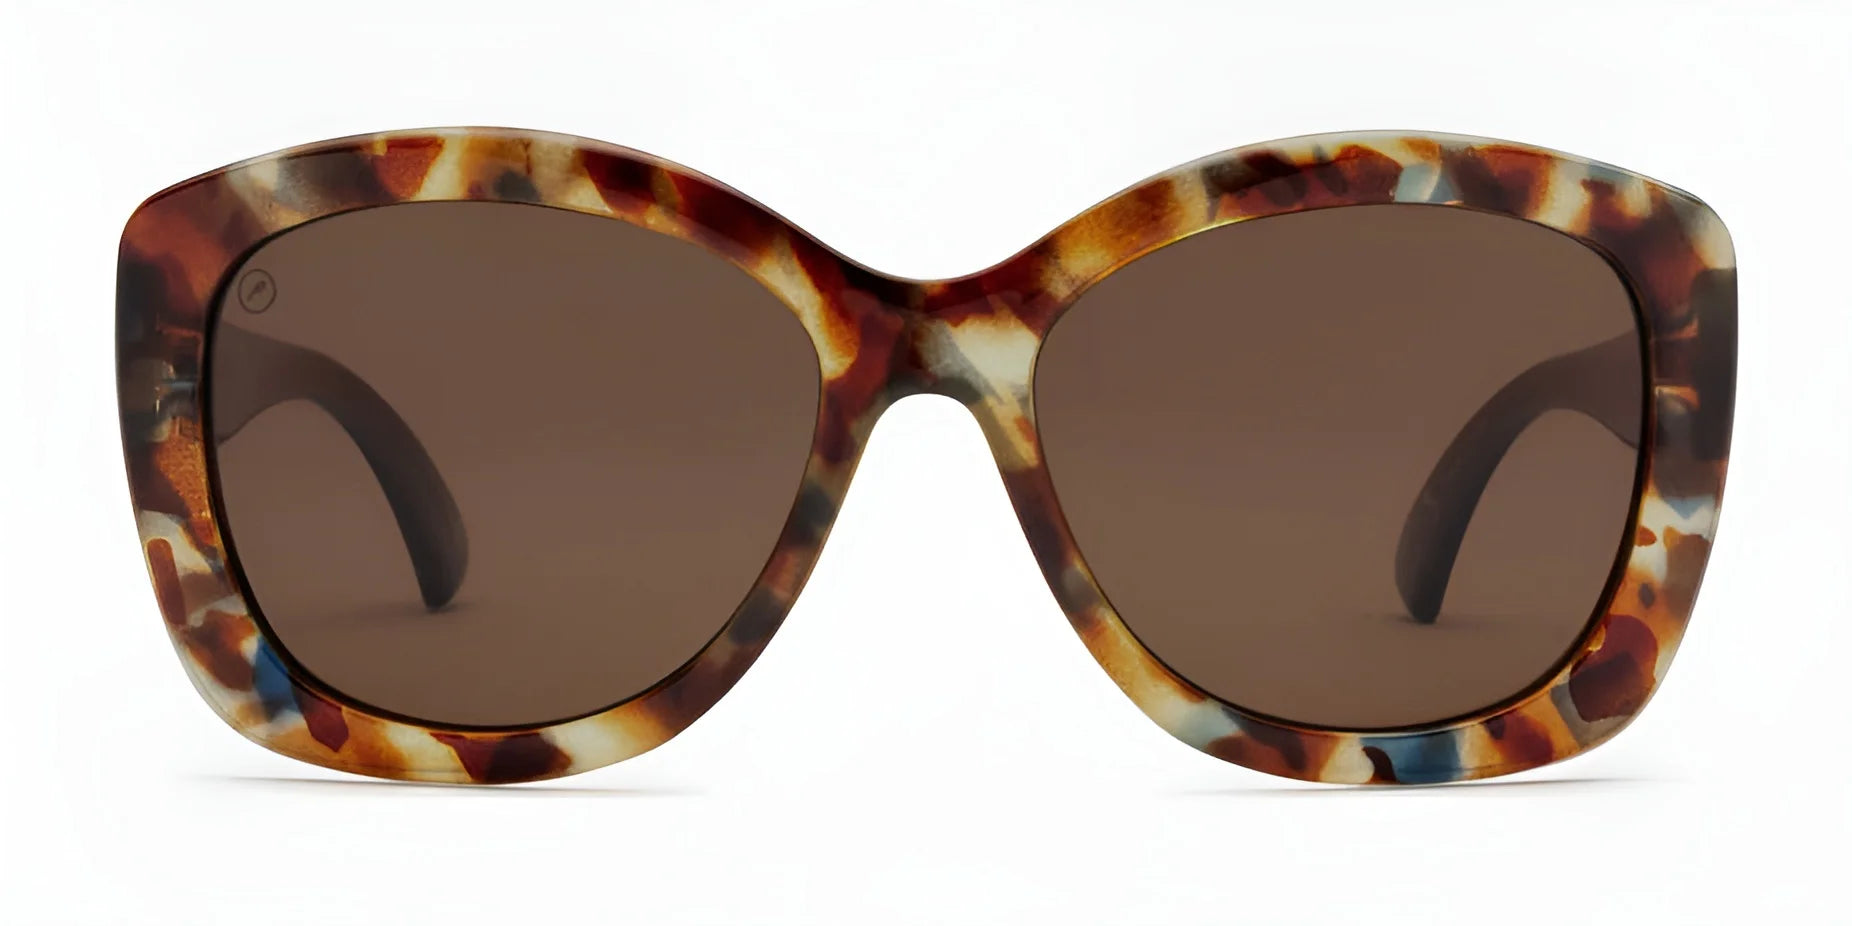 Electric Gaviota Sunglasses Tahiti / Bronze Polarized